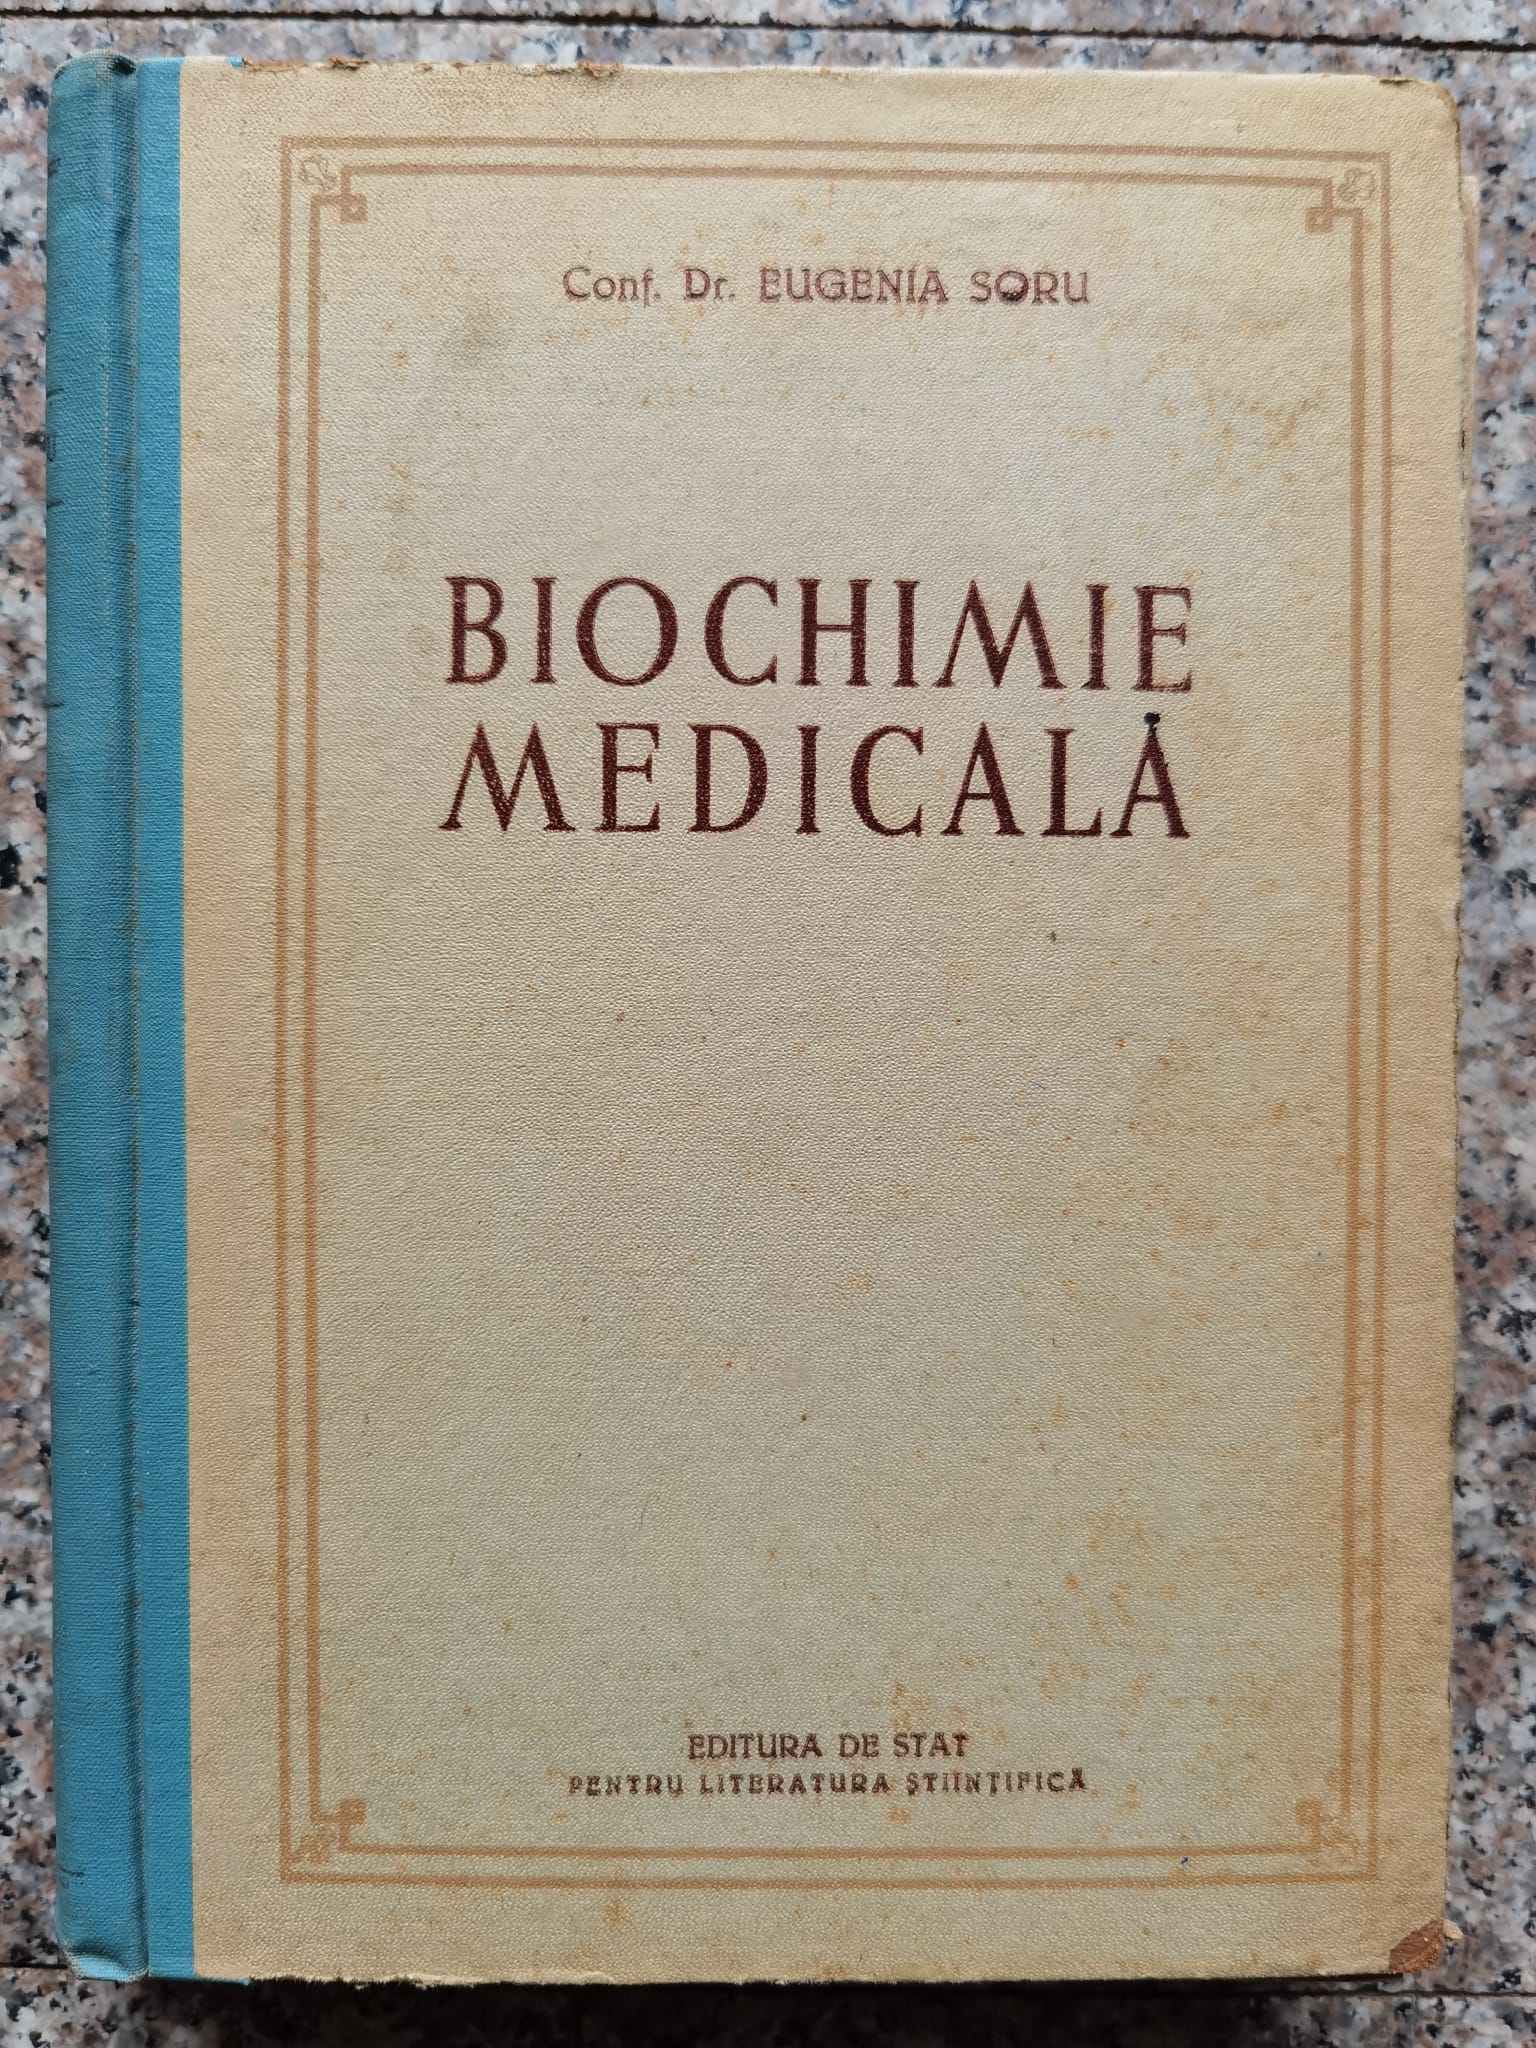 biochimie medicala                                                                                   eugenia soru                                                                                        